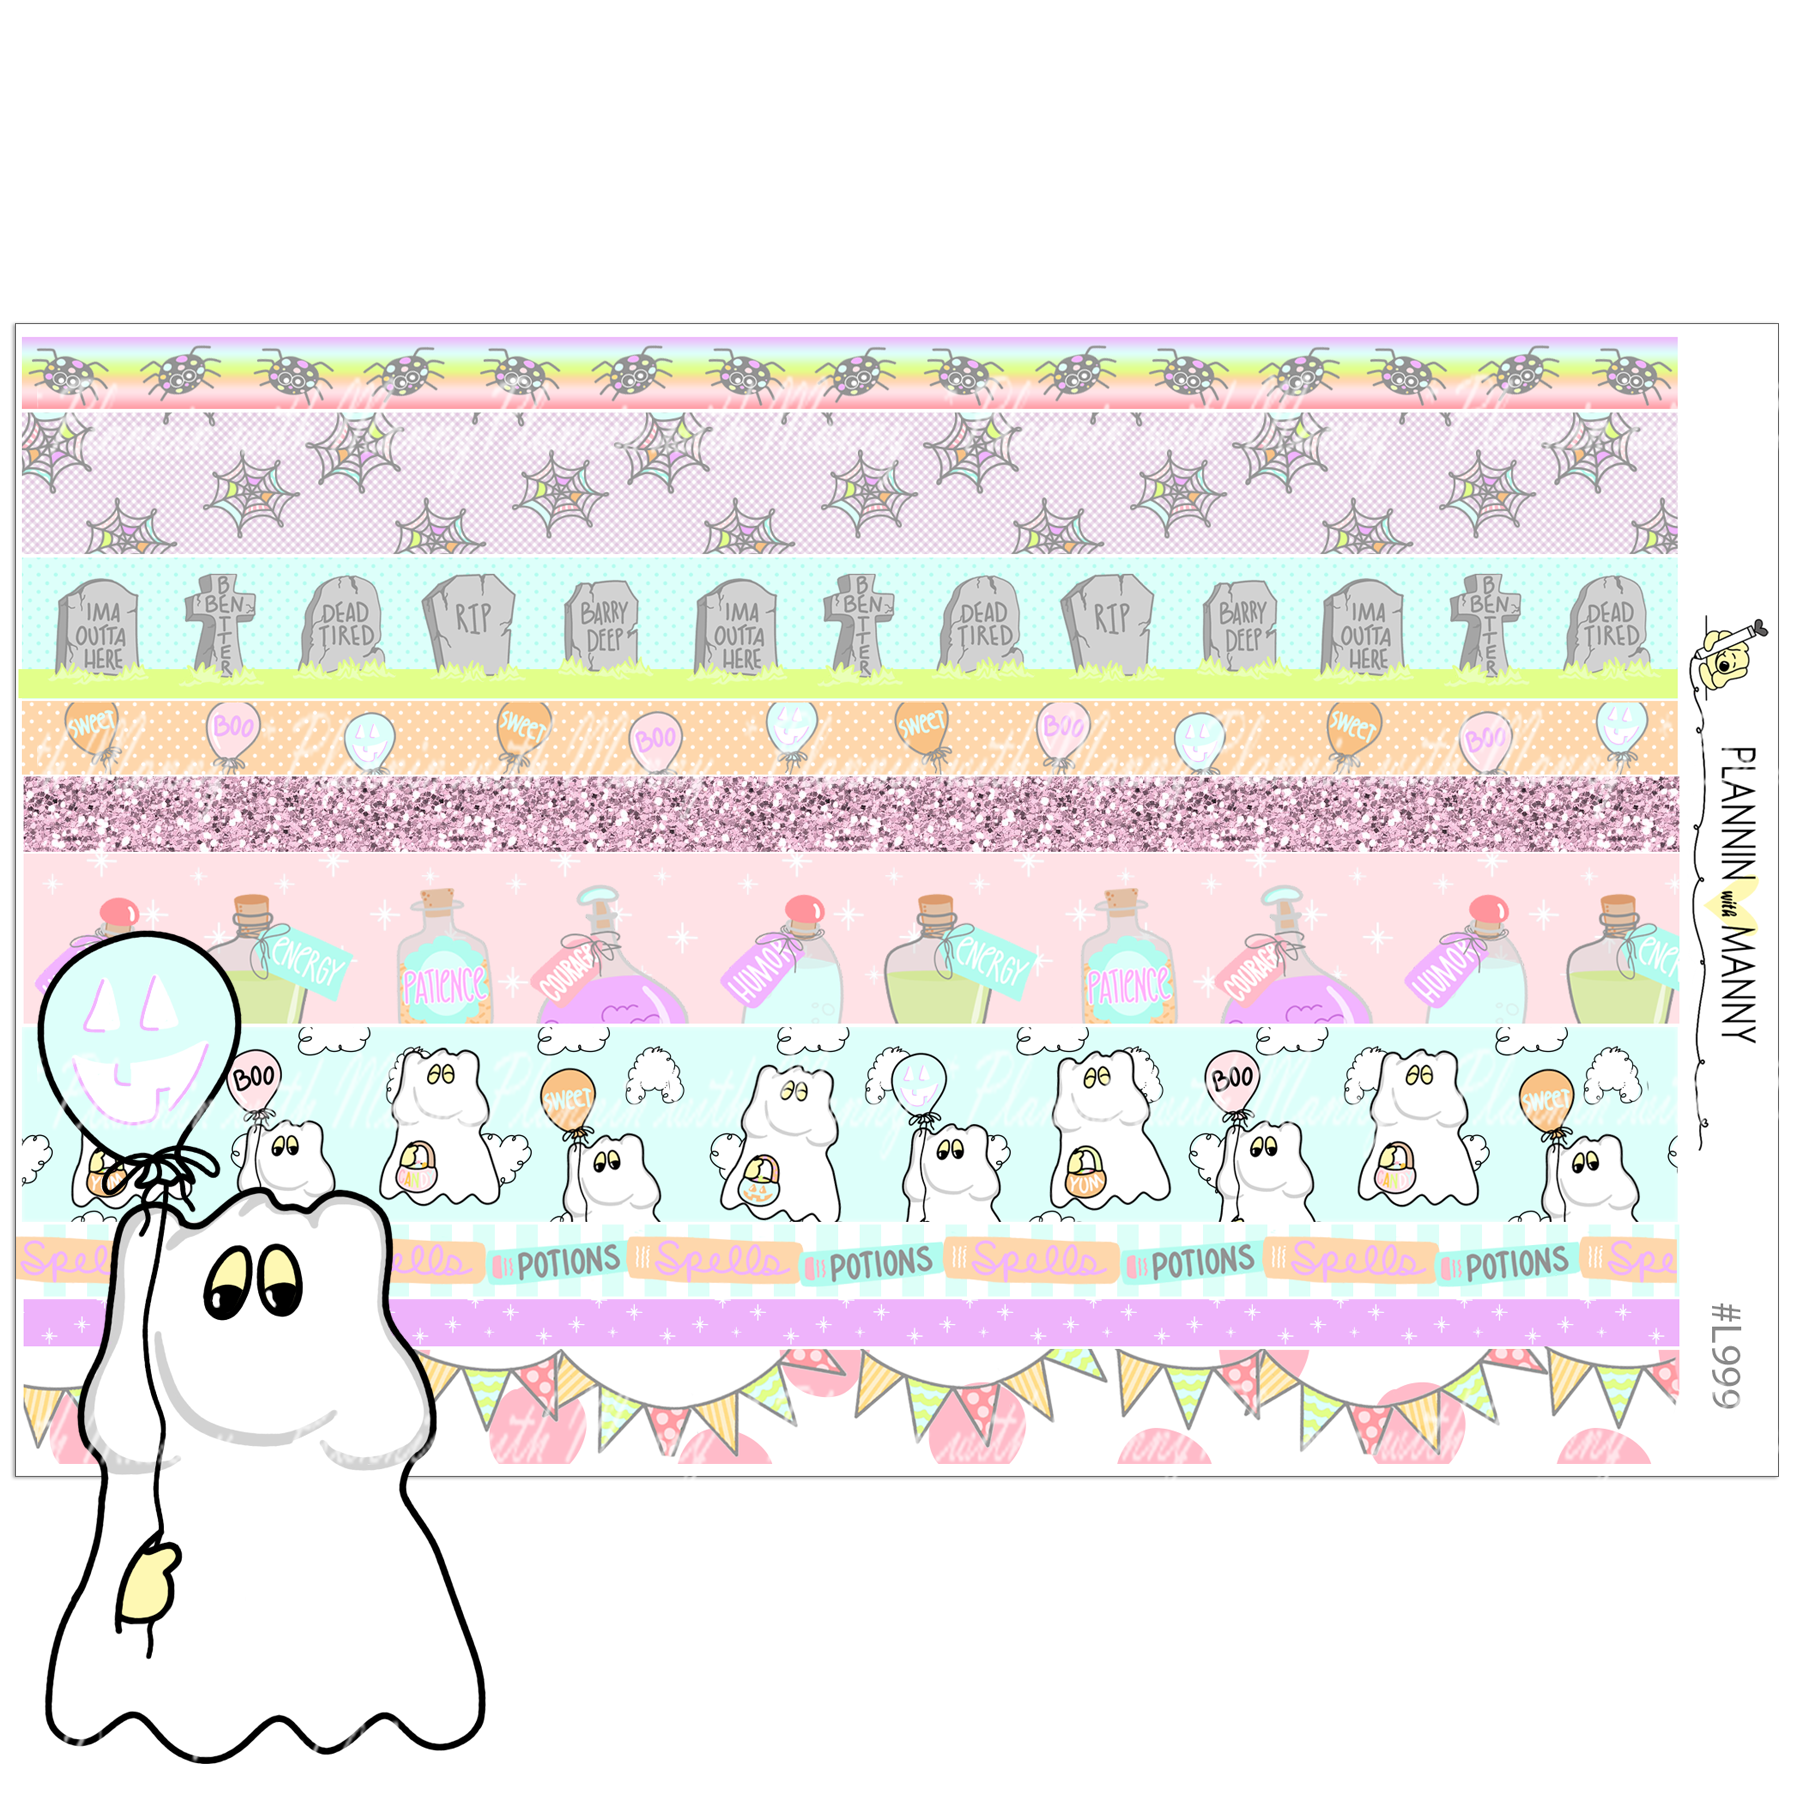 L999 Spooky Bits Washi Sticker Sheet